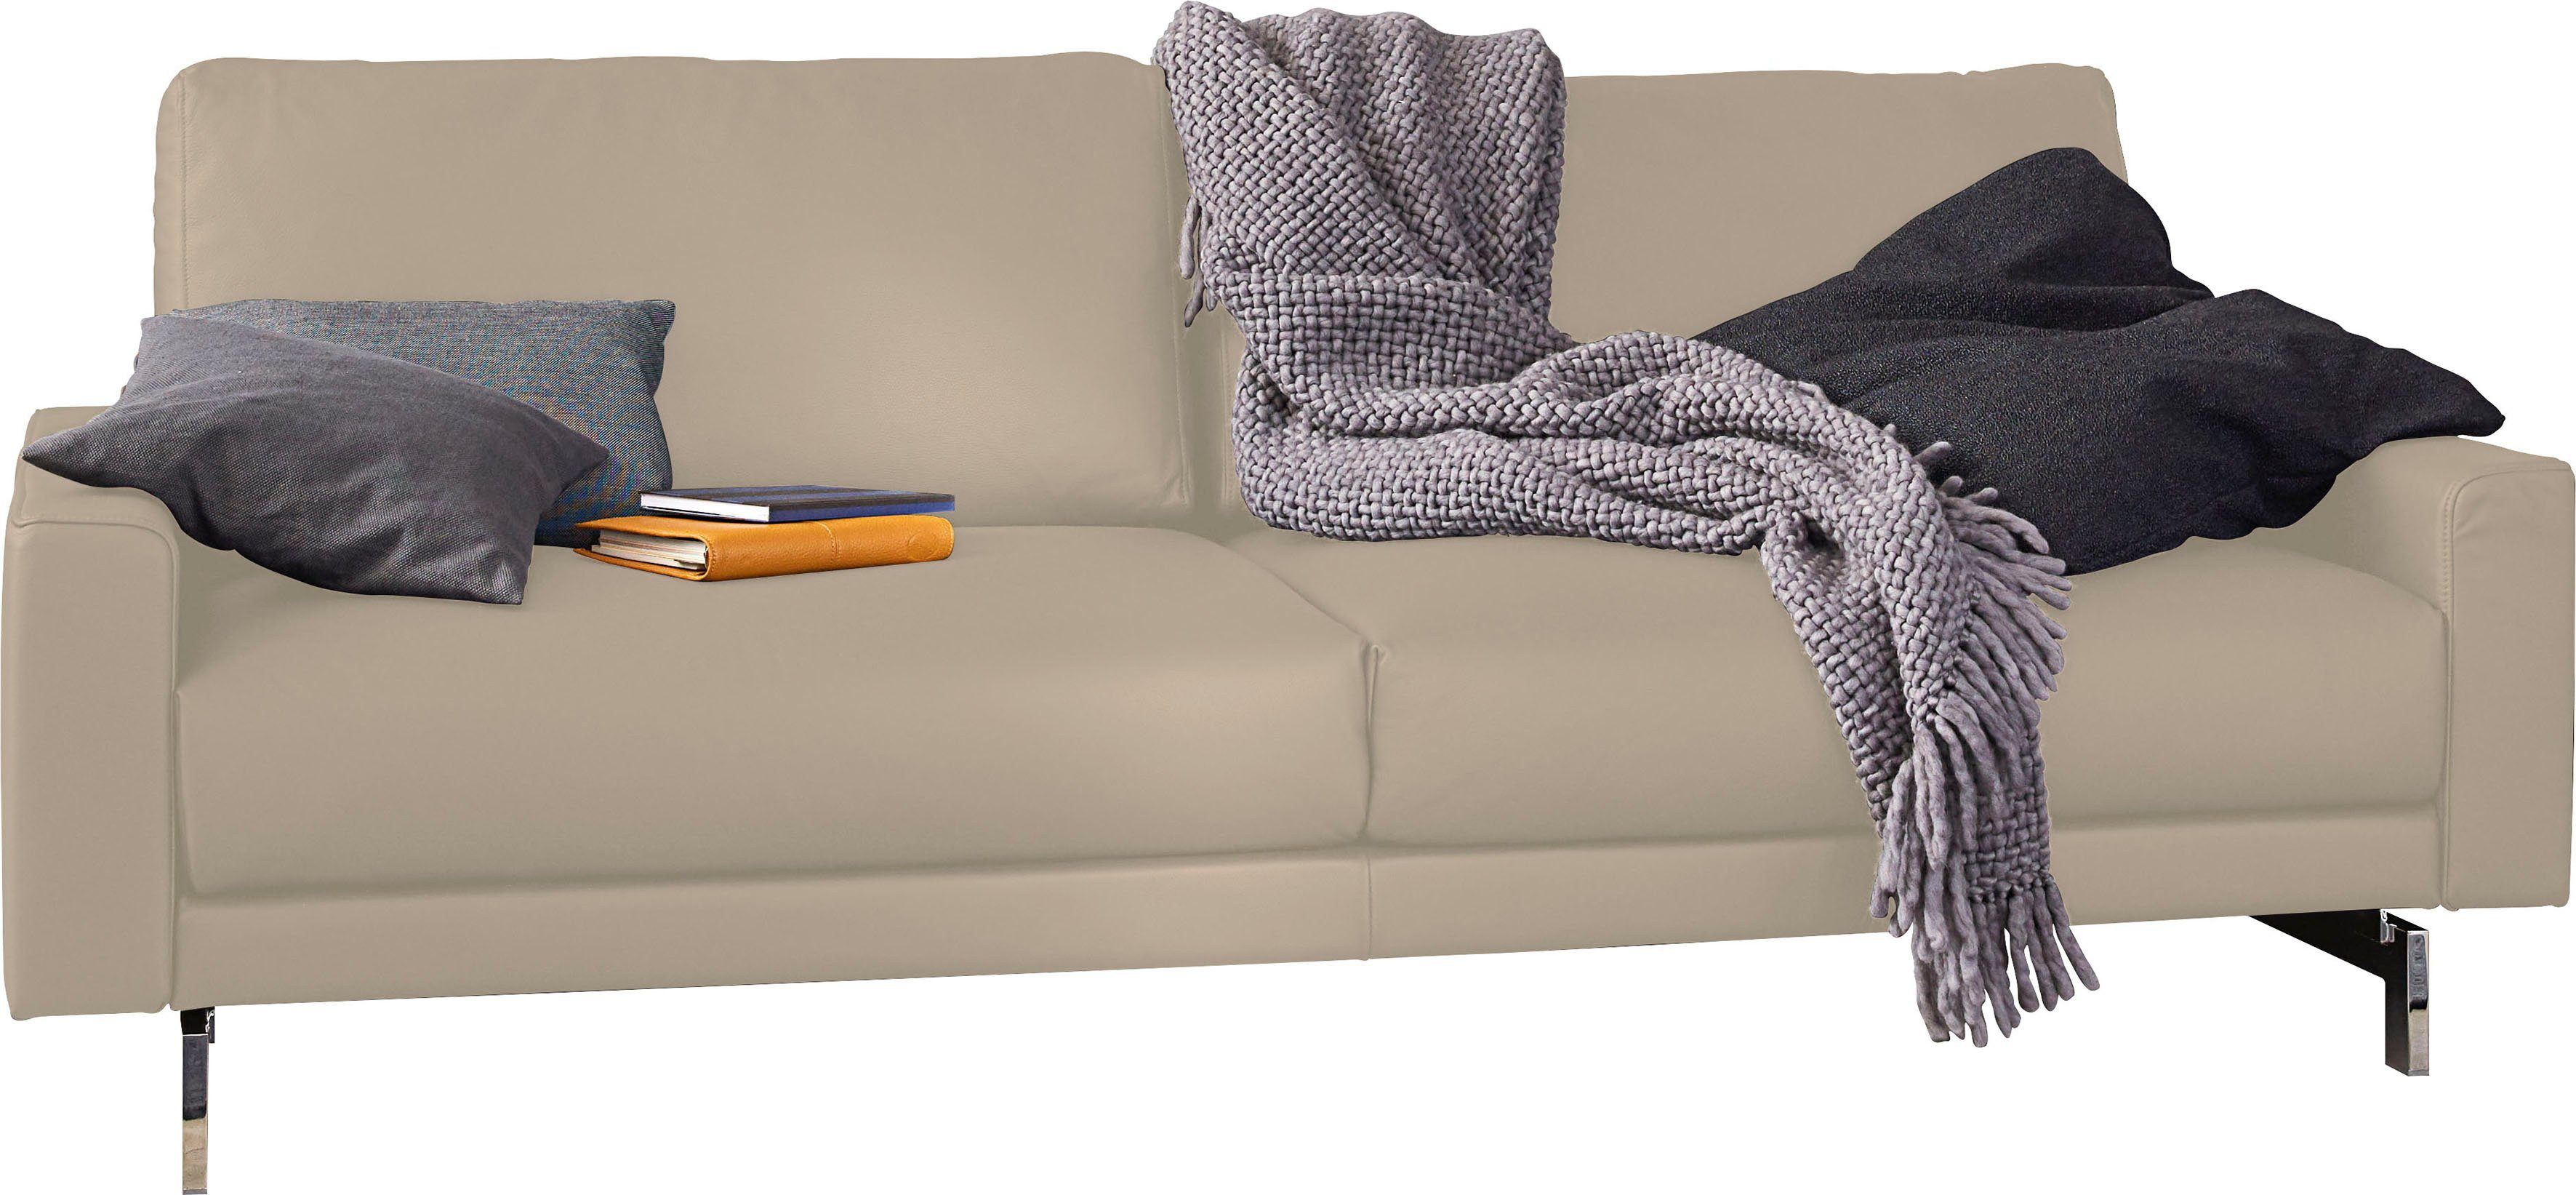 cm Breite 2-Sitzer Armlehne glänzend, hs.450, chromfarben sofa niedrig, hülsta Fuß 164